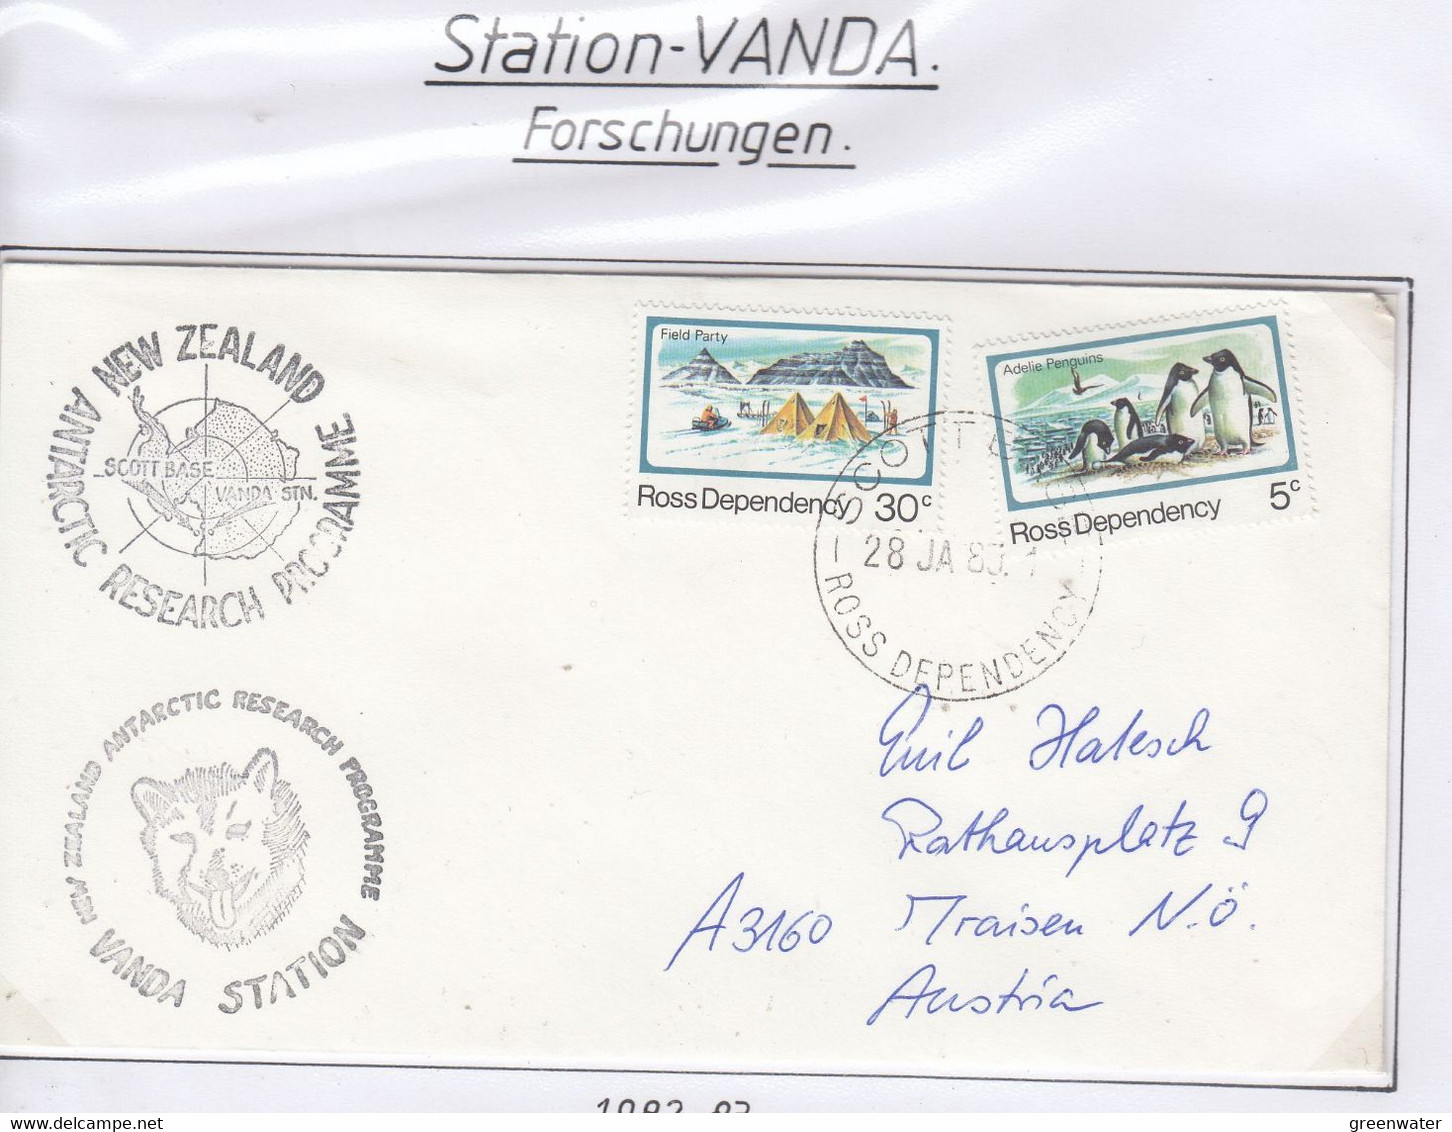 Ross Dependency 1980 Vanda Station  Ca Scott Base 28 JA 80 (CB177B) - Covers & Documents